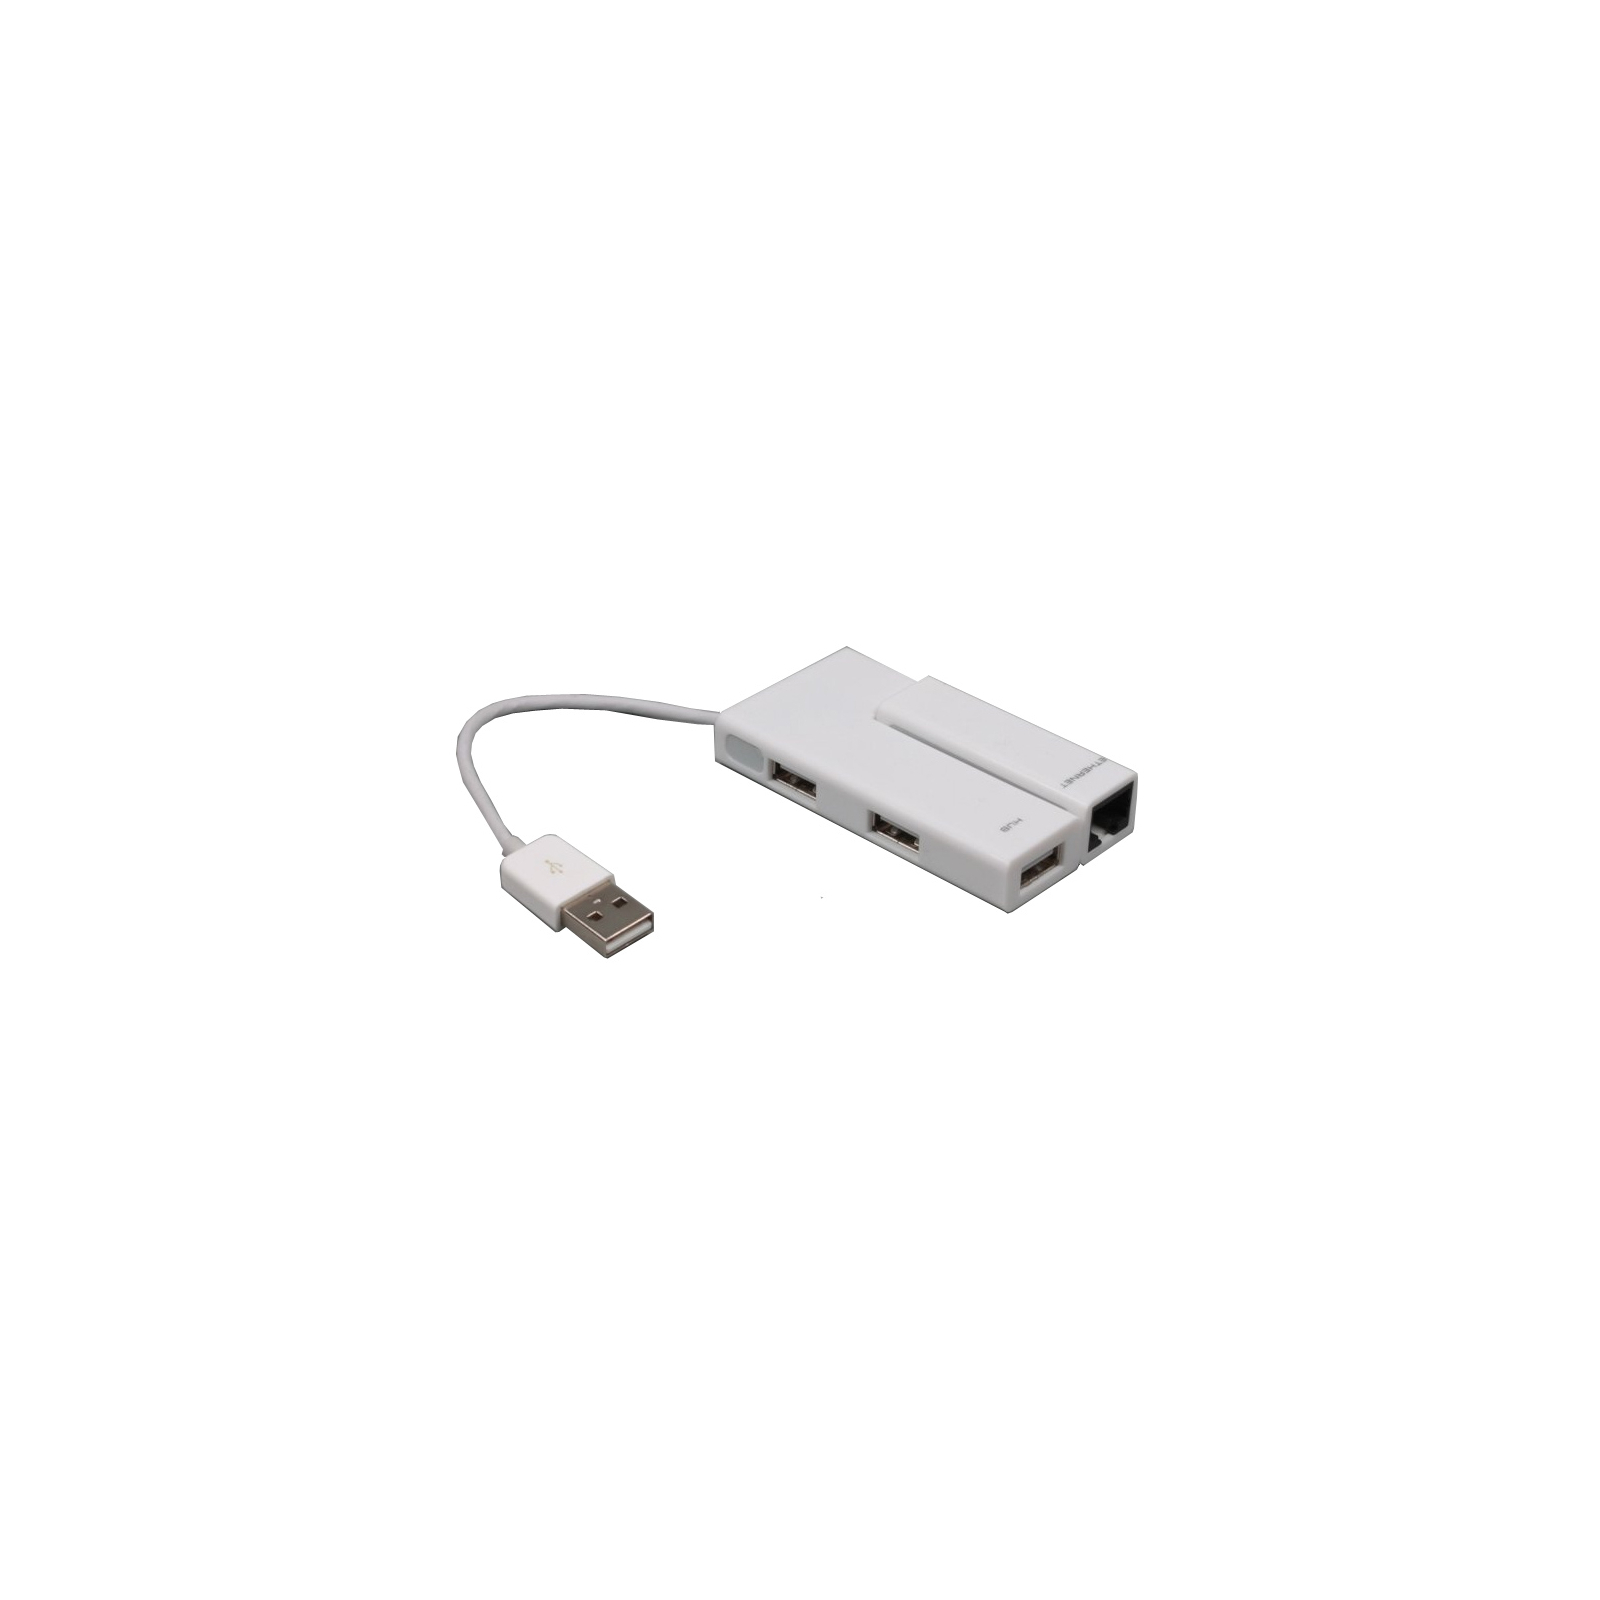 Переходник USB2.0 to Ethernet 100Mb Viewcon (VE 450 W (White))